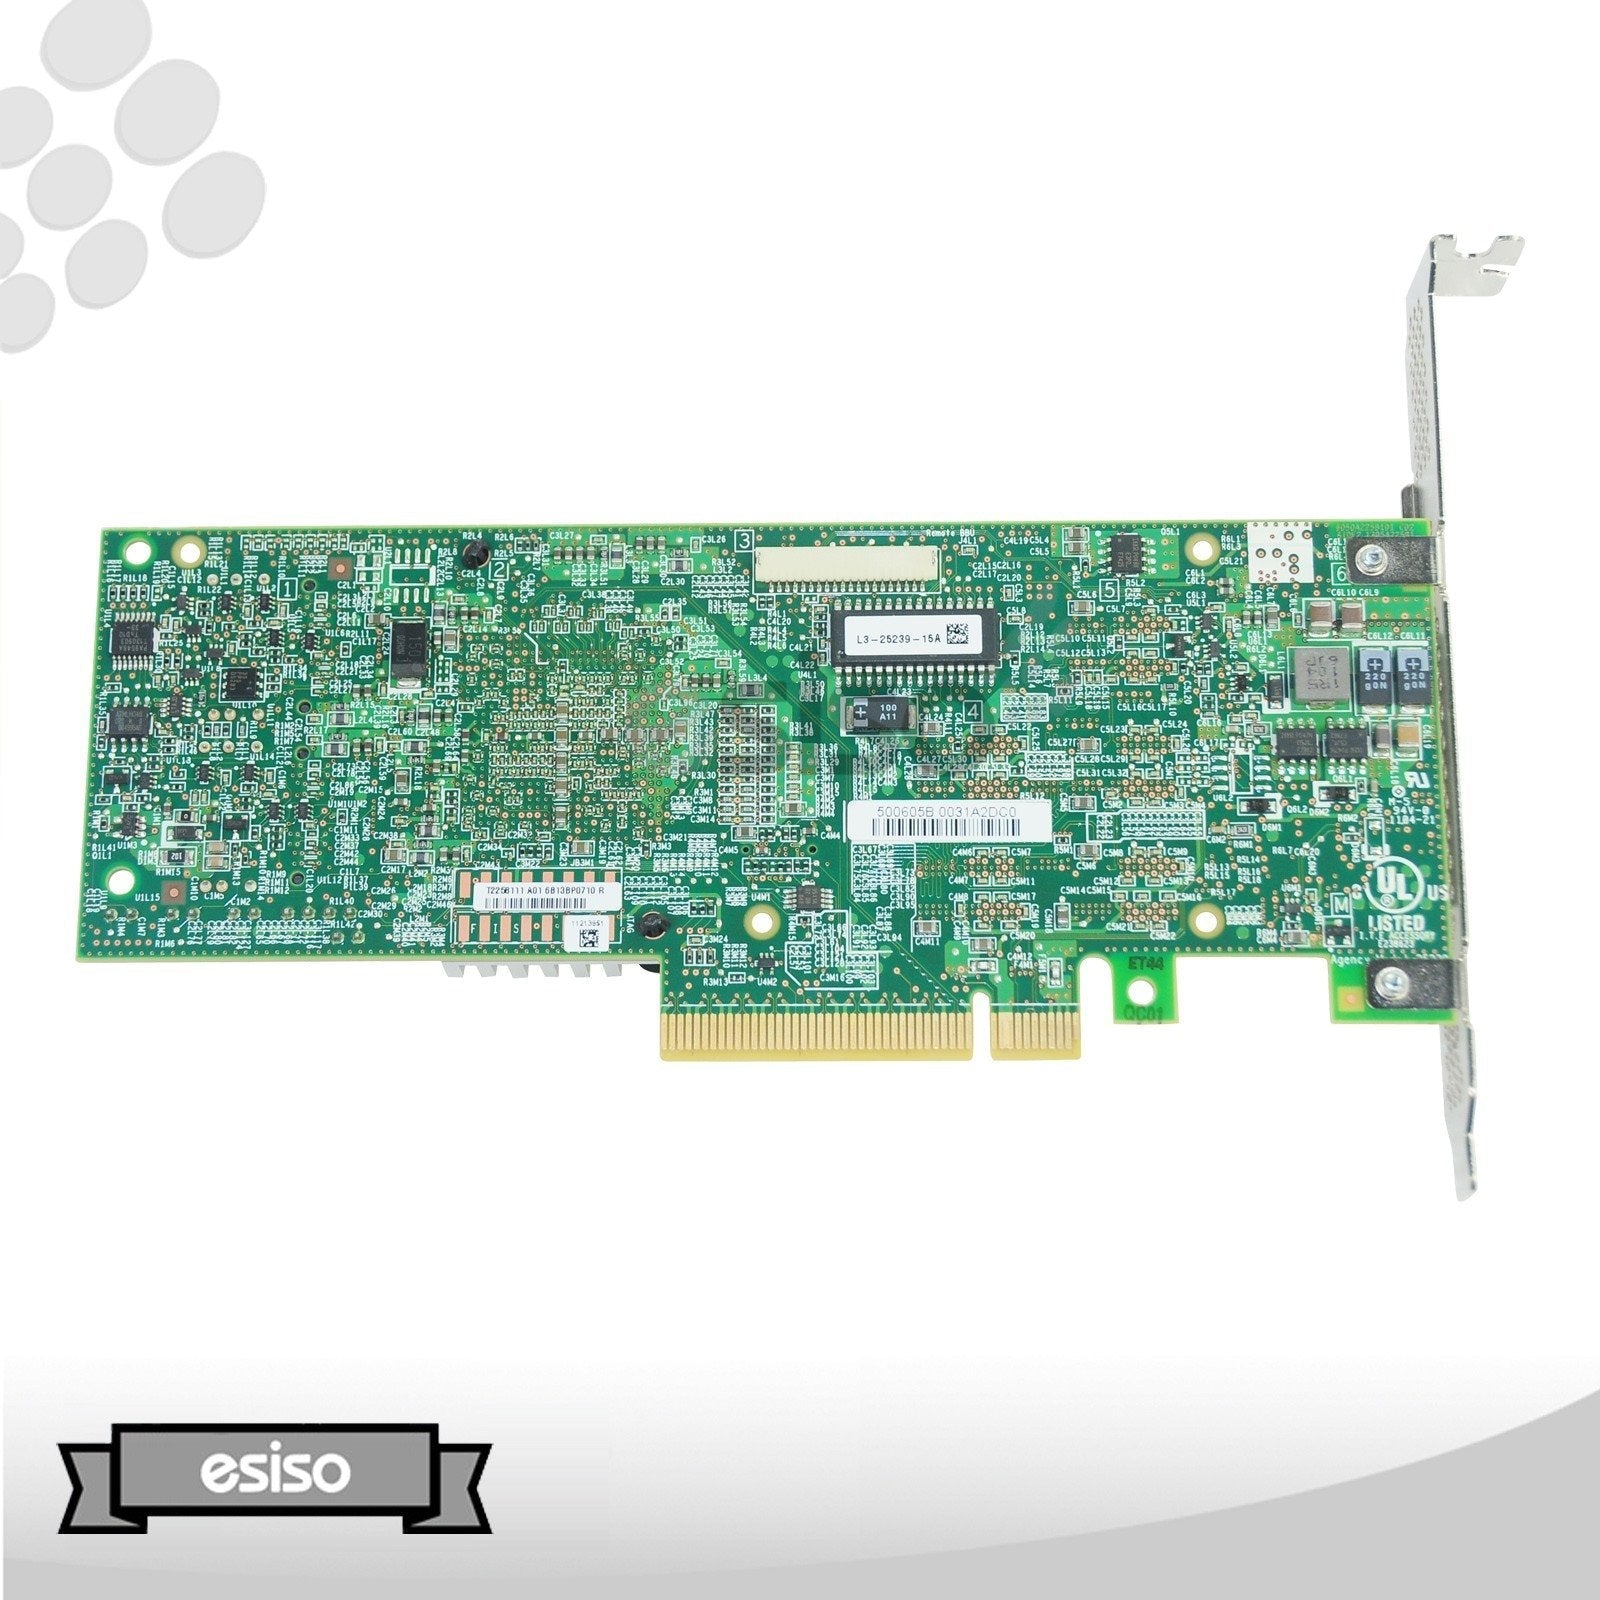 SAS9261-8I LSI LOGIC MEGARAID 6G SATA/SAS RAID CONTROLLER CARD